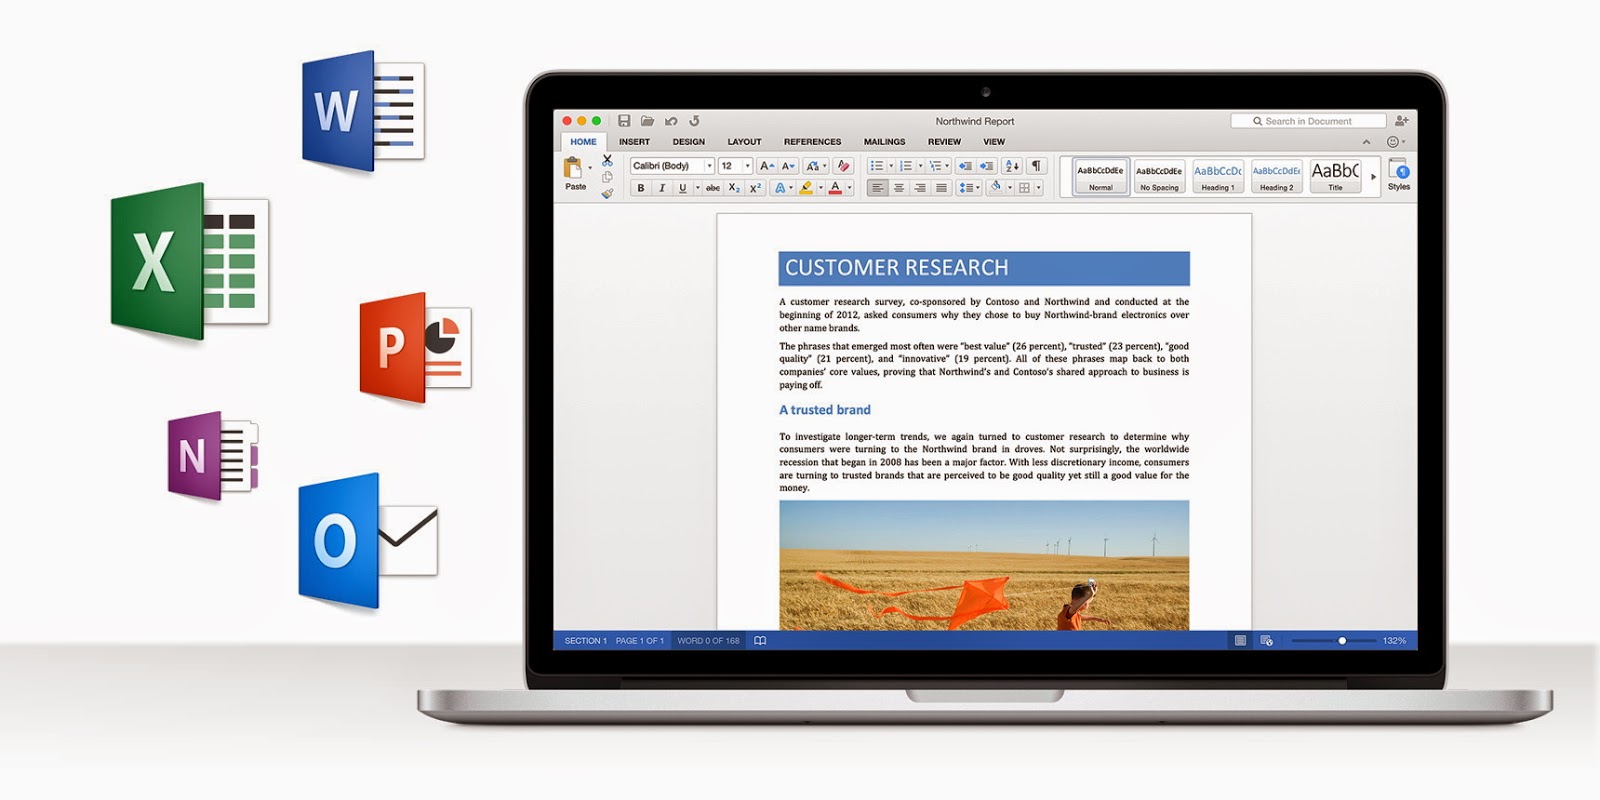 Microsoft Office Mac 2015 Free Download